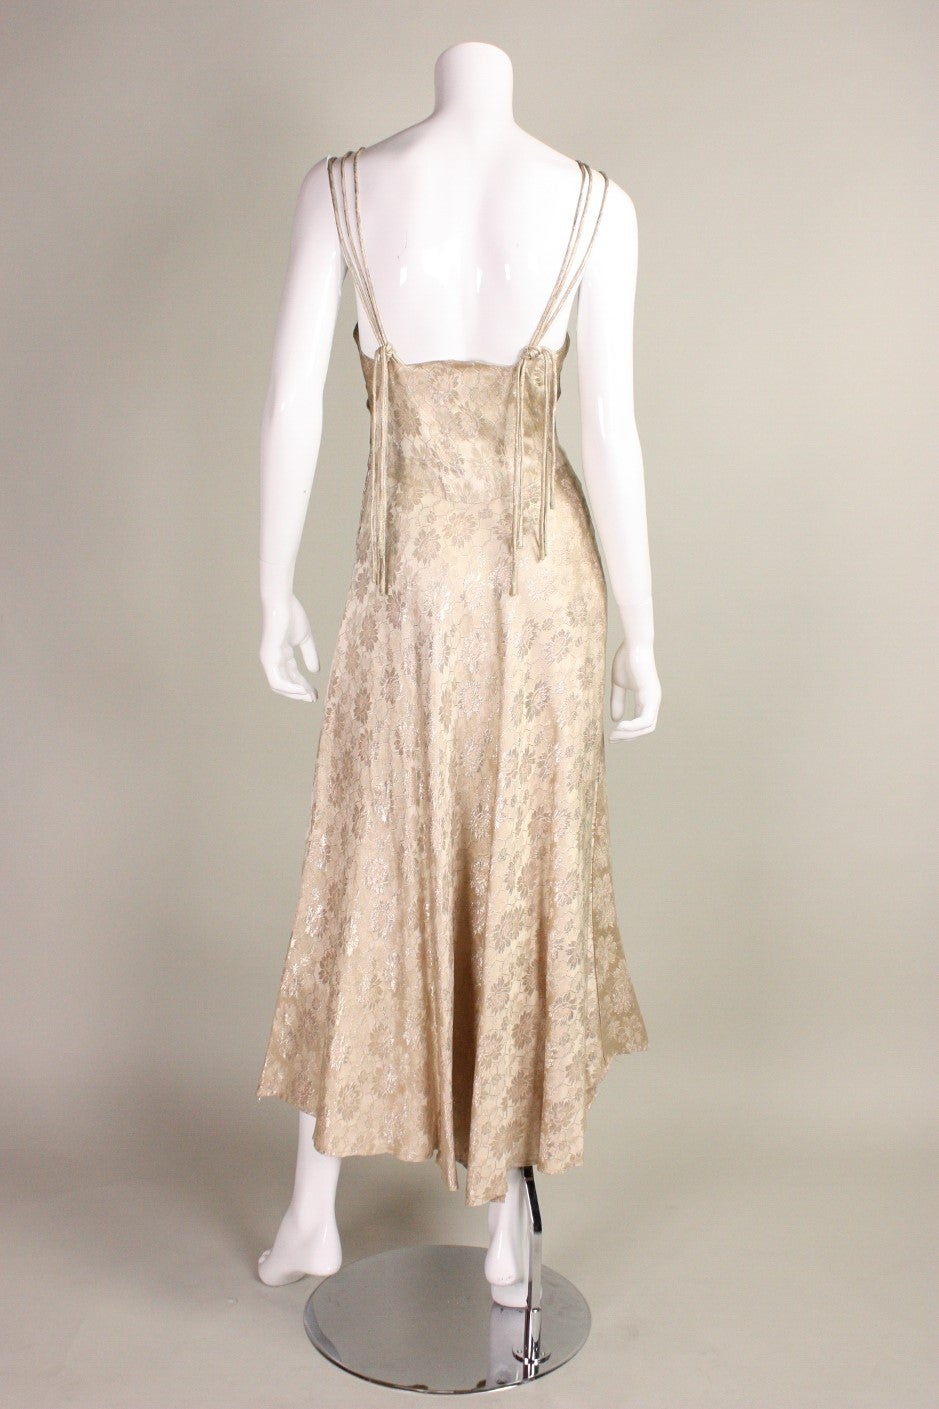 1930's Lamé Bias-Cut Evening Dress For Sale at 1stdibs